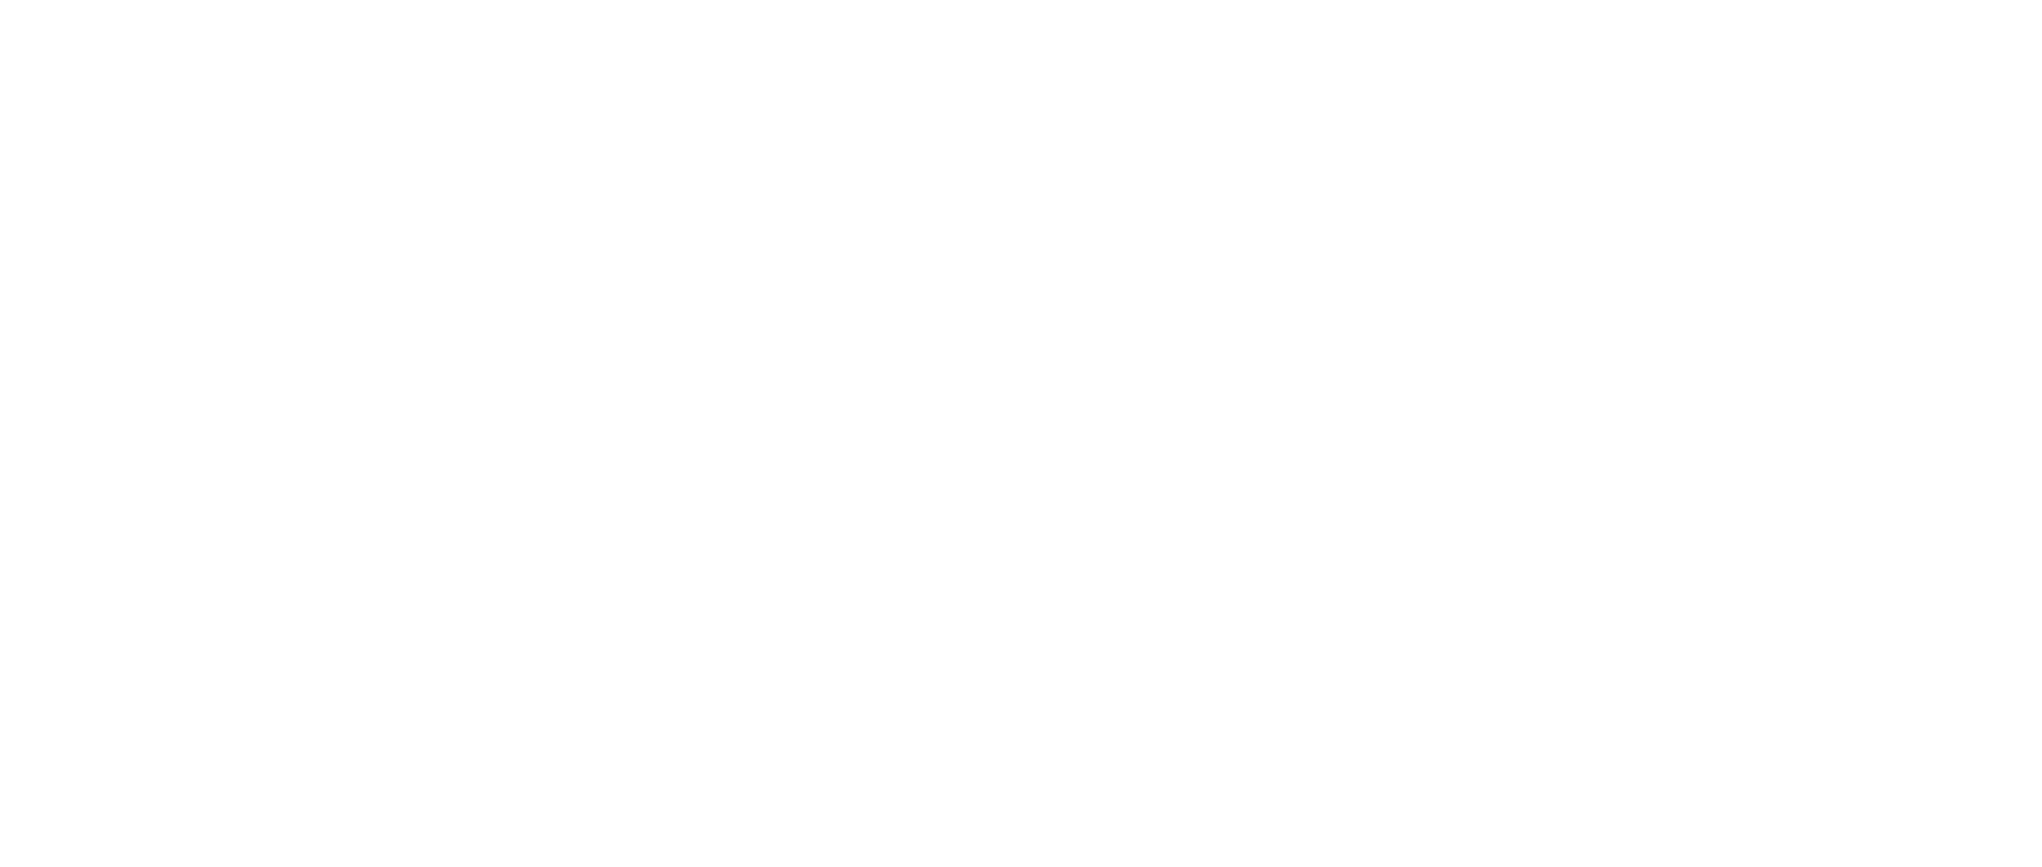 Standard logo for Calbie Creative digital design company in white